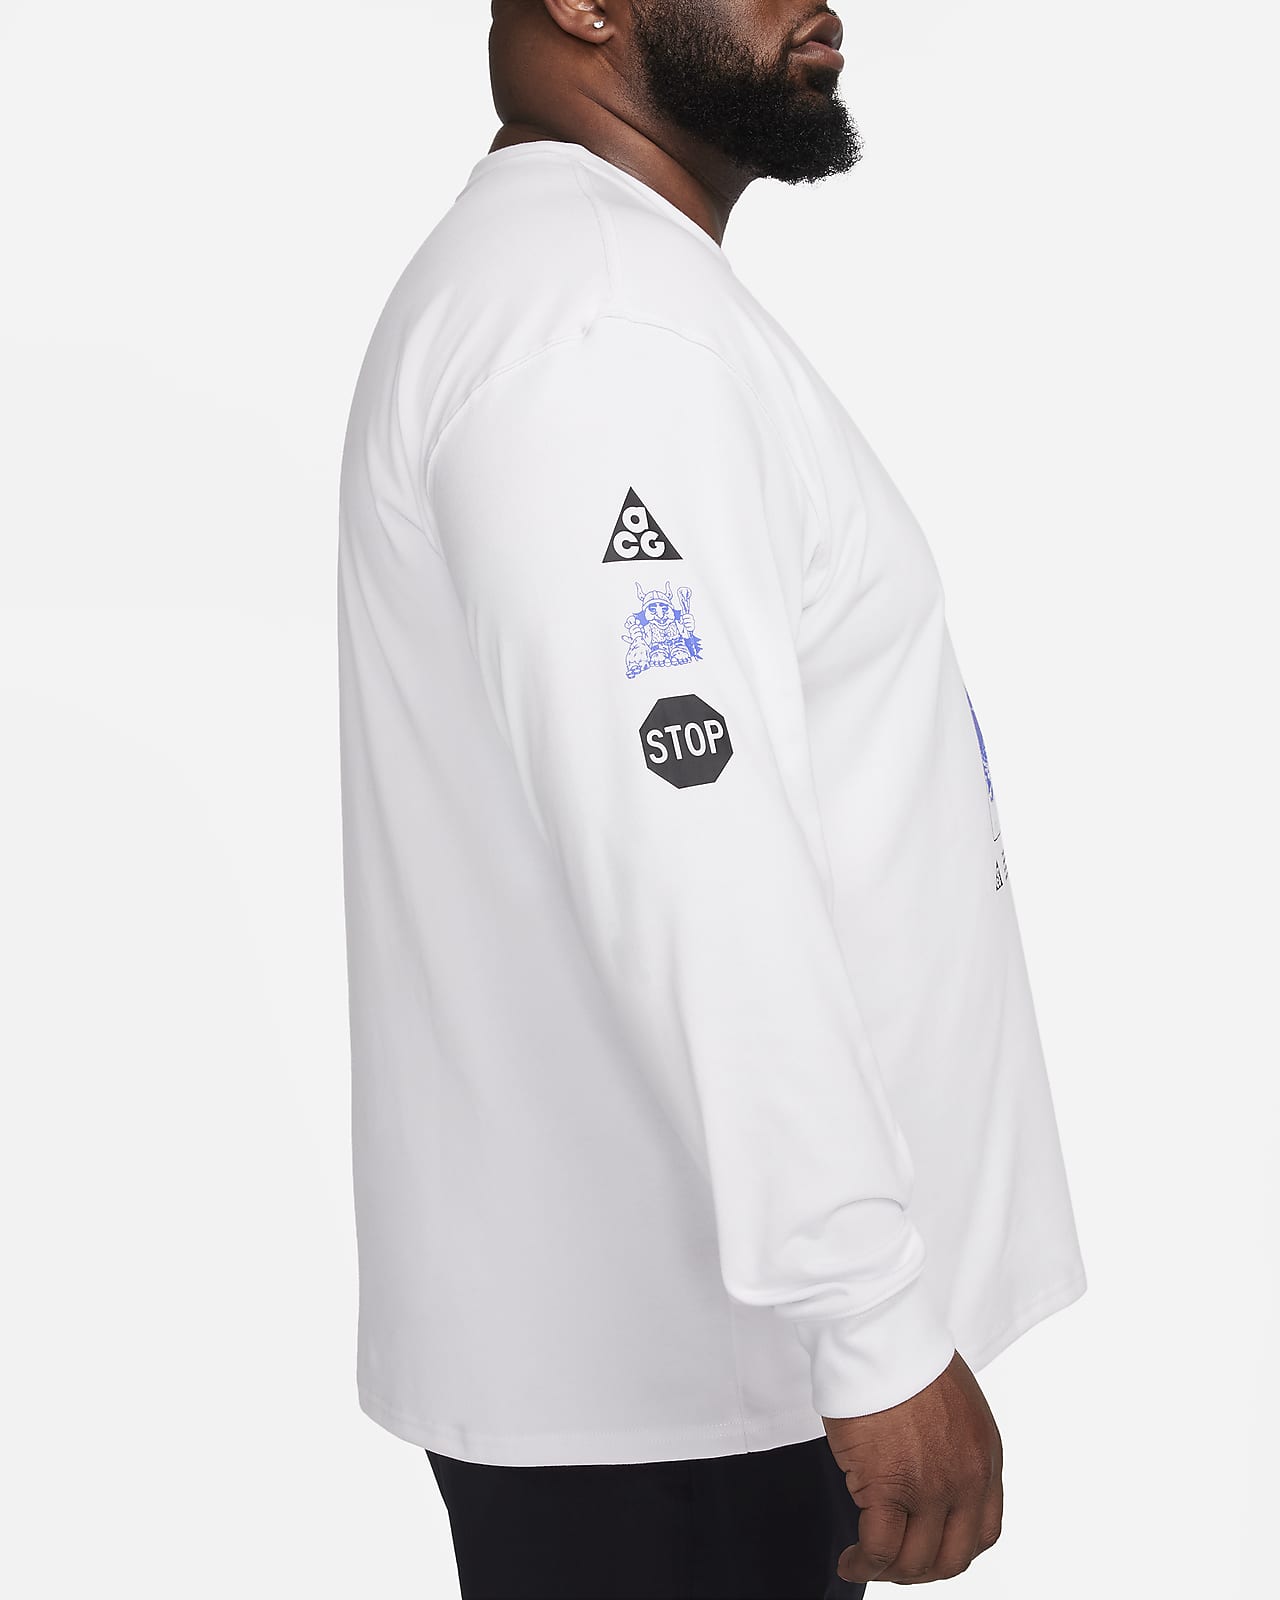 Nike ACG Shirt Mens XL Long Sleeve Vented Fishing Palestine